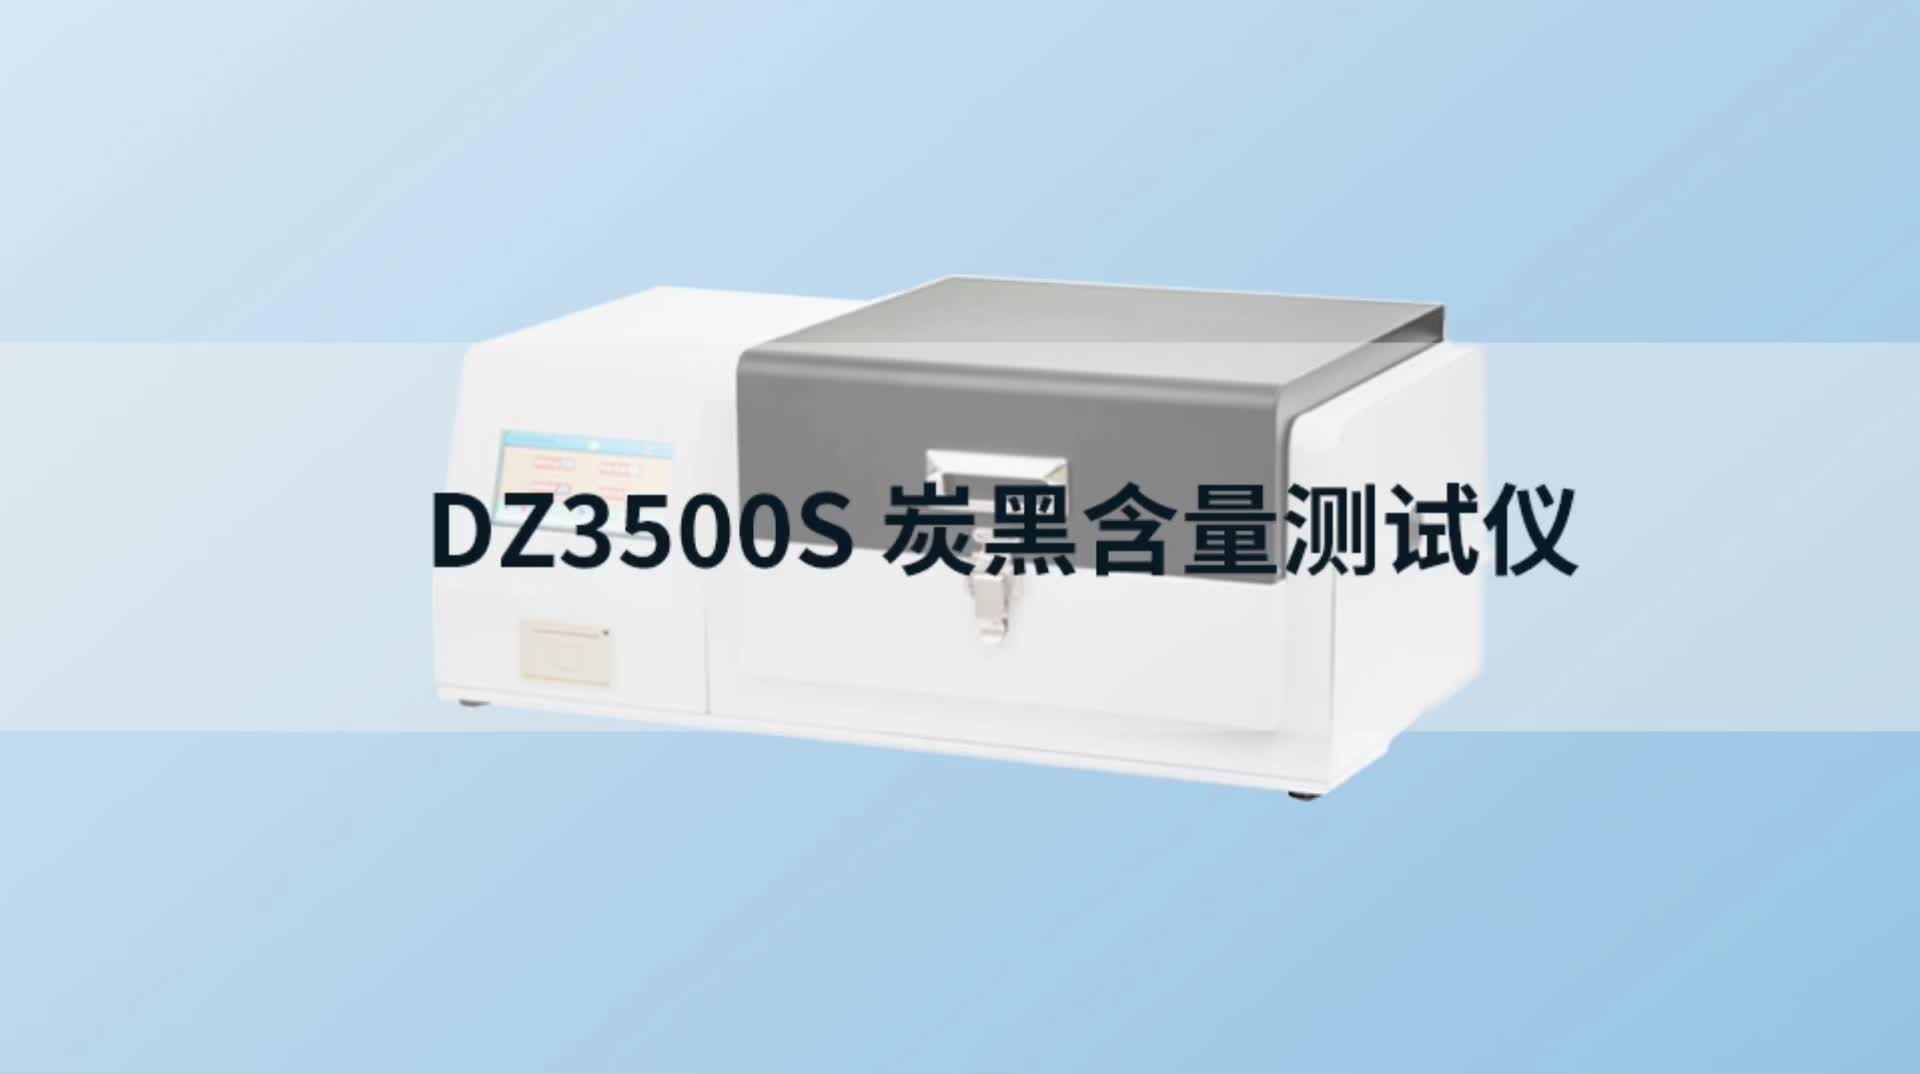 DZ3500S 炭黑含量测试仪 #新品推荐 #炭黑含量测定仪 